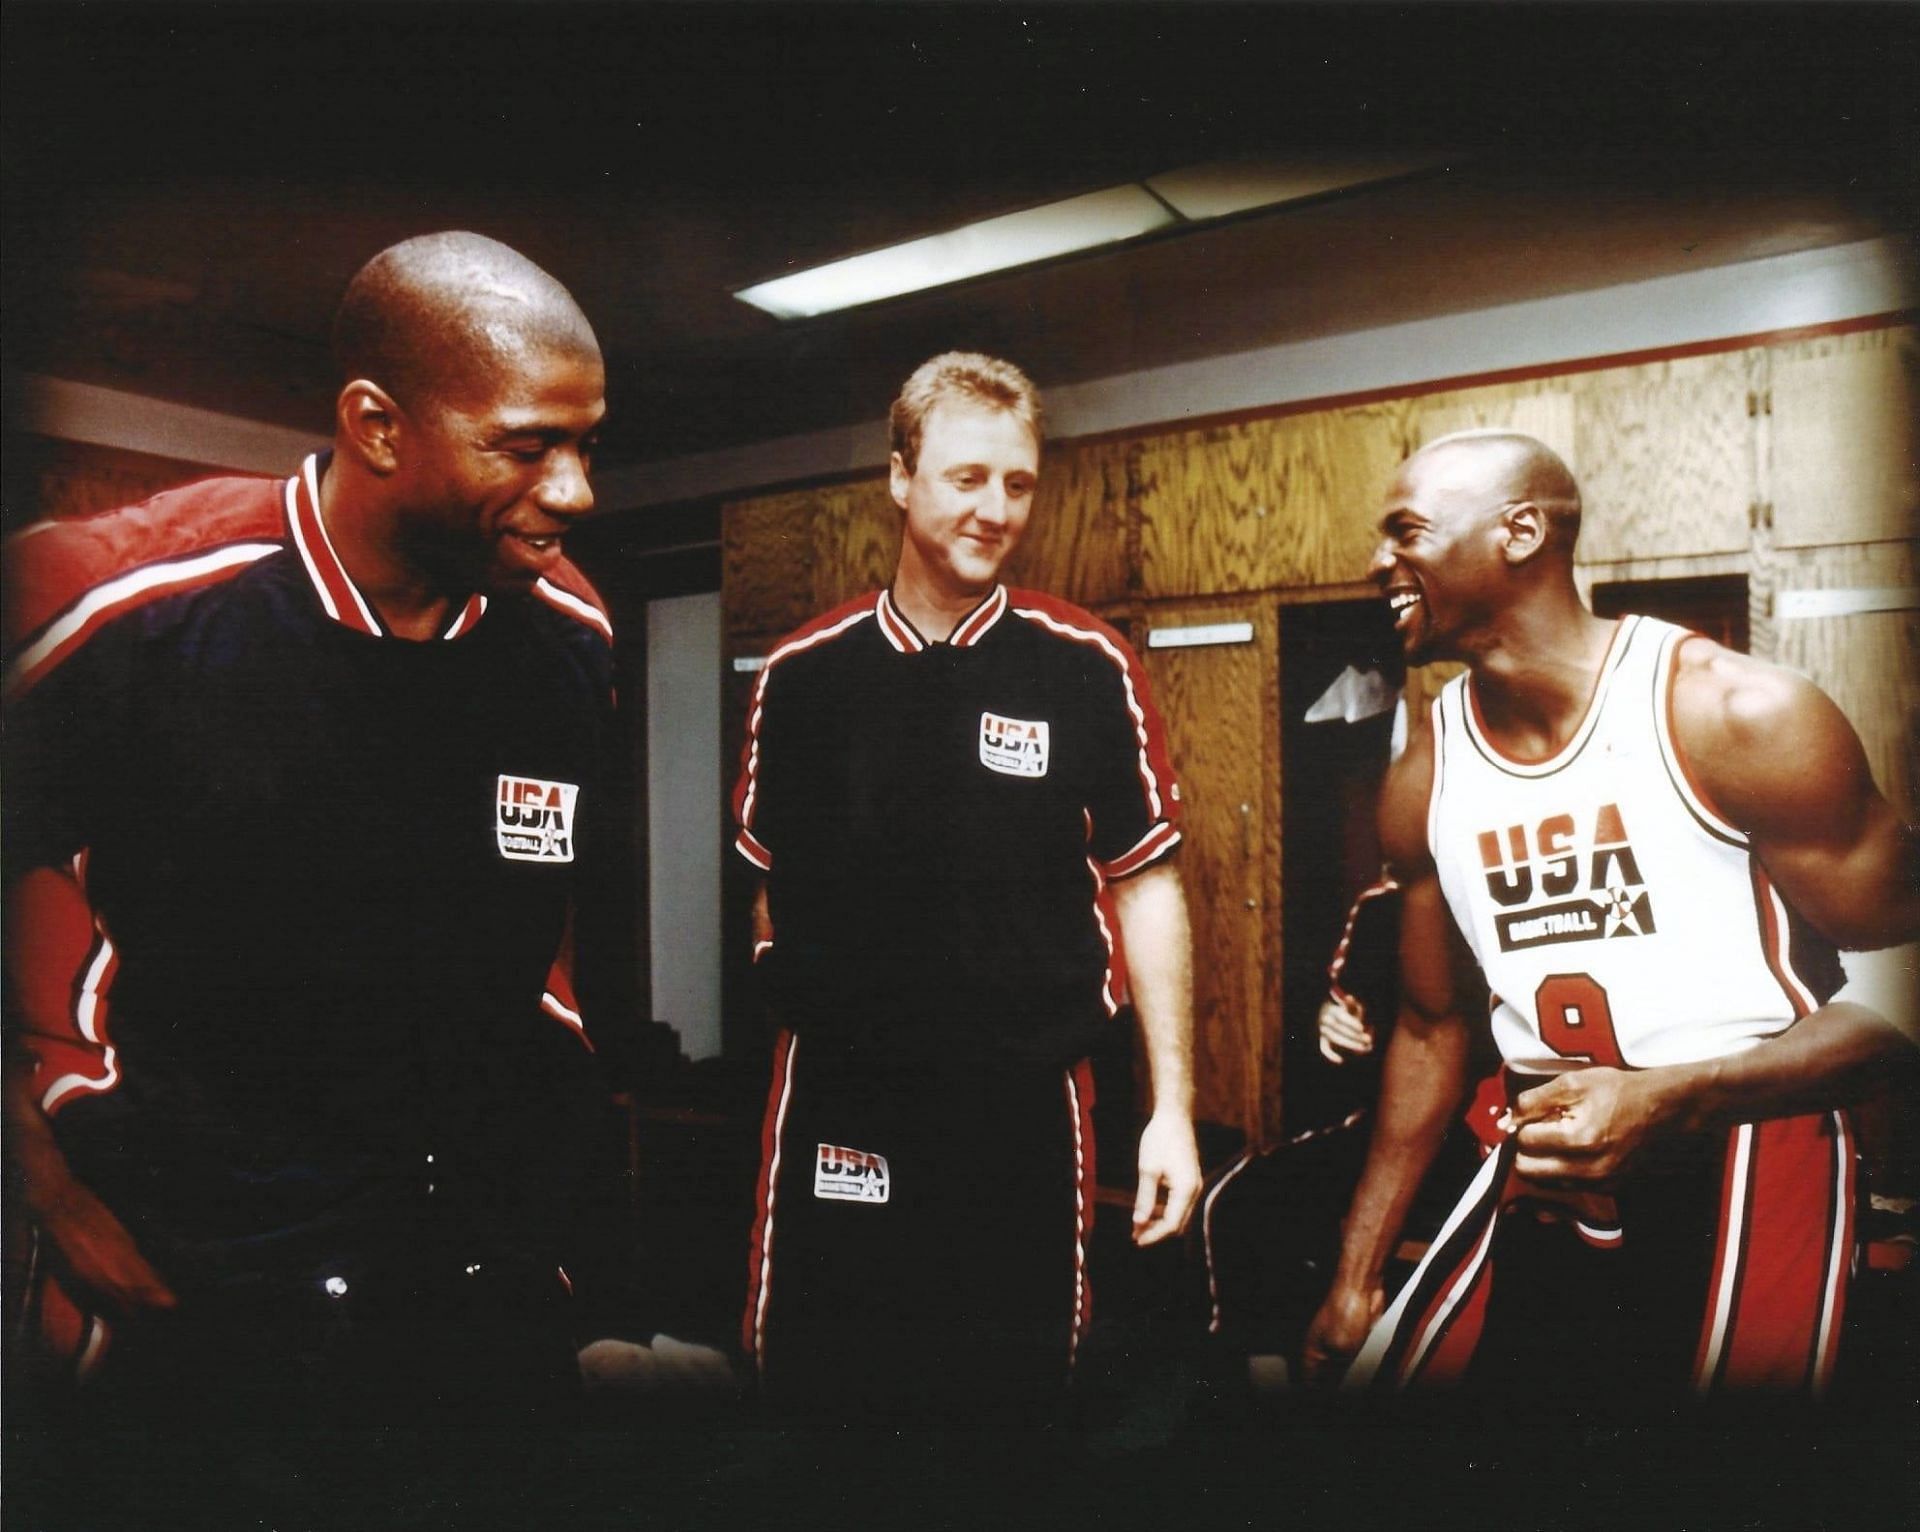 Michael Jordan would officially rule the NBA after the 1992 Barcelona Olympics. [Photo: teahub.io]